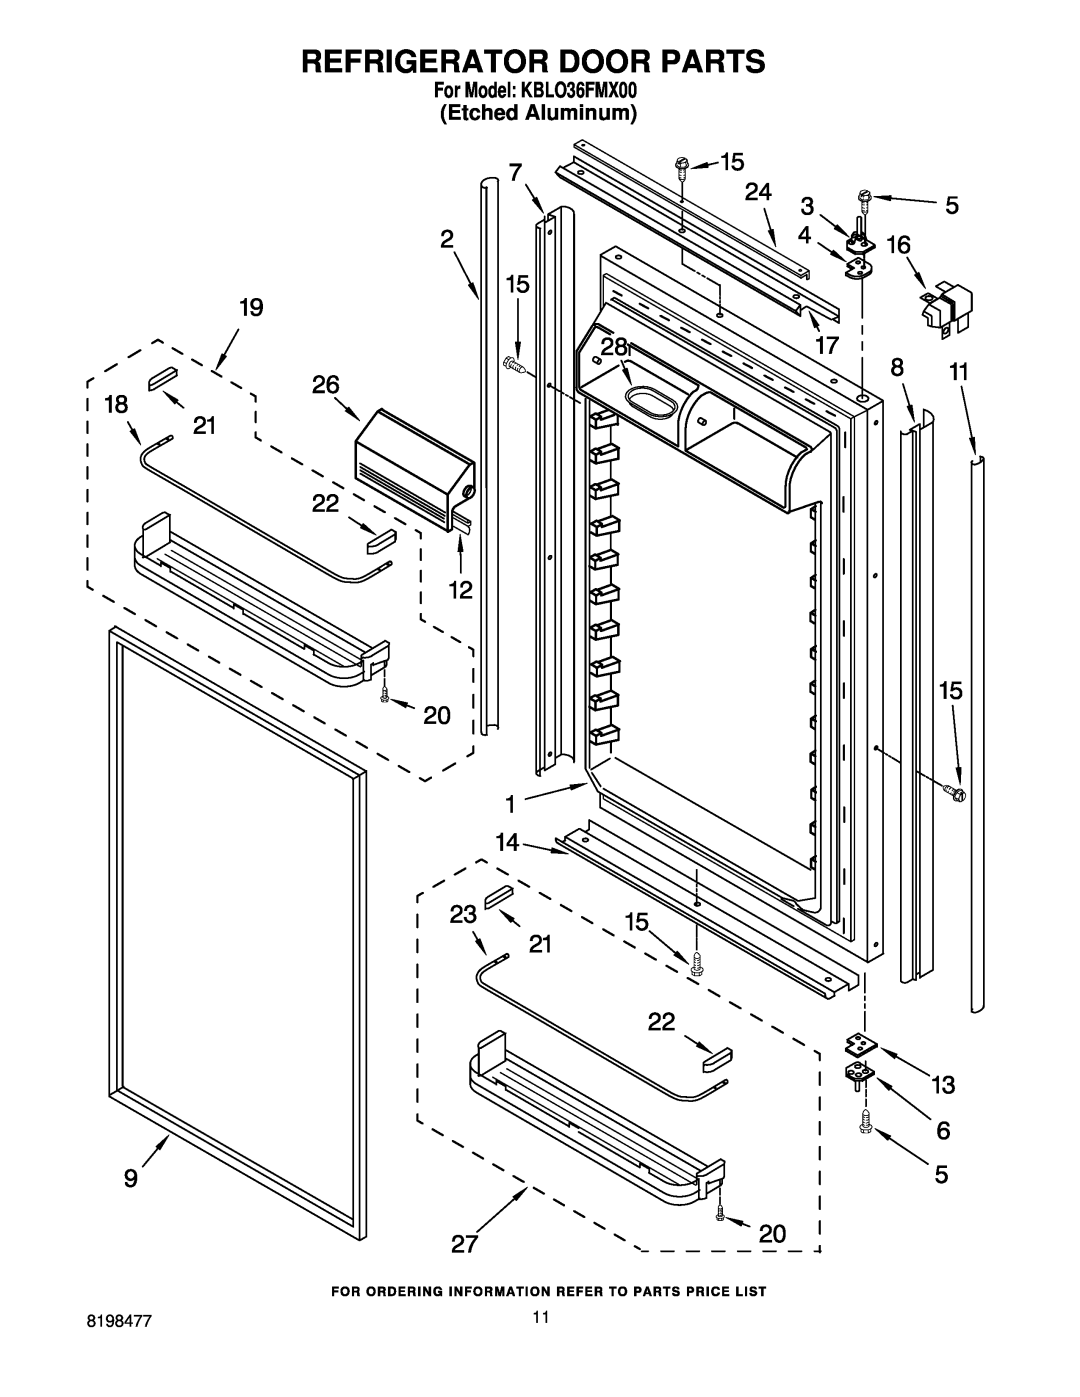 KitchenAid manual Refrigerator Door Parts, For Model KBLO36FMX00 Etched Aluminum 